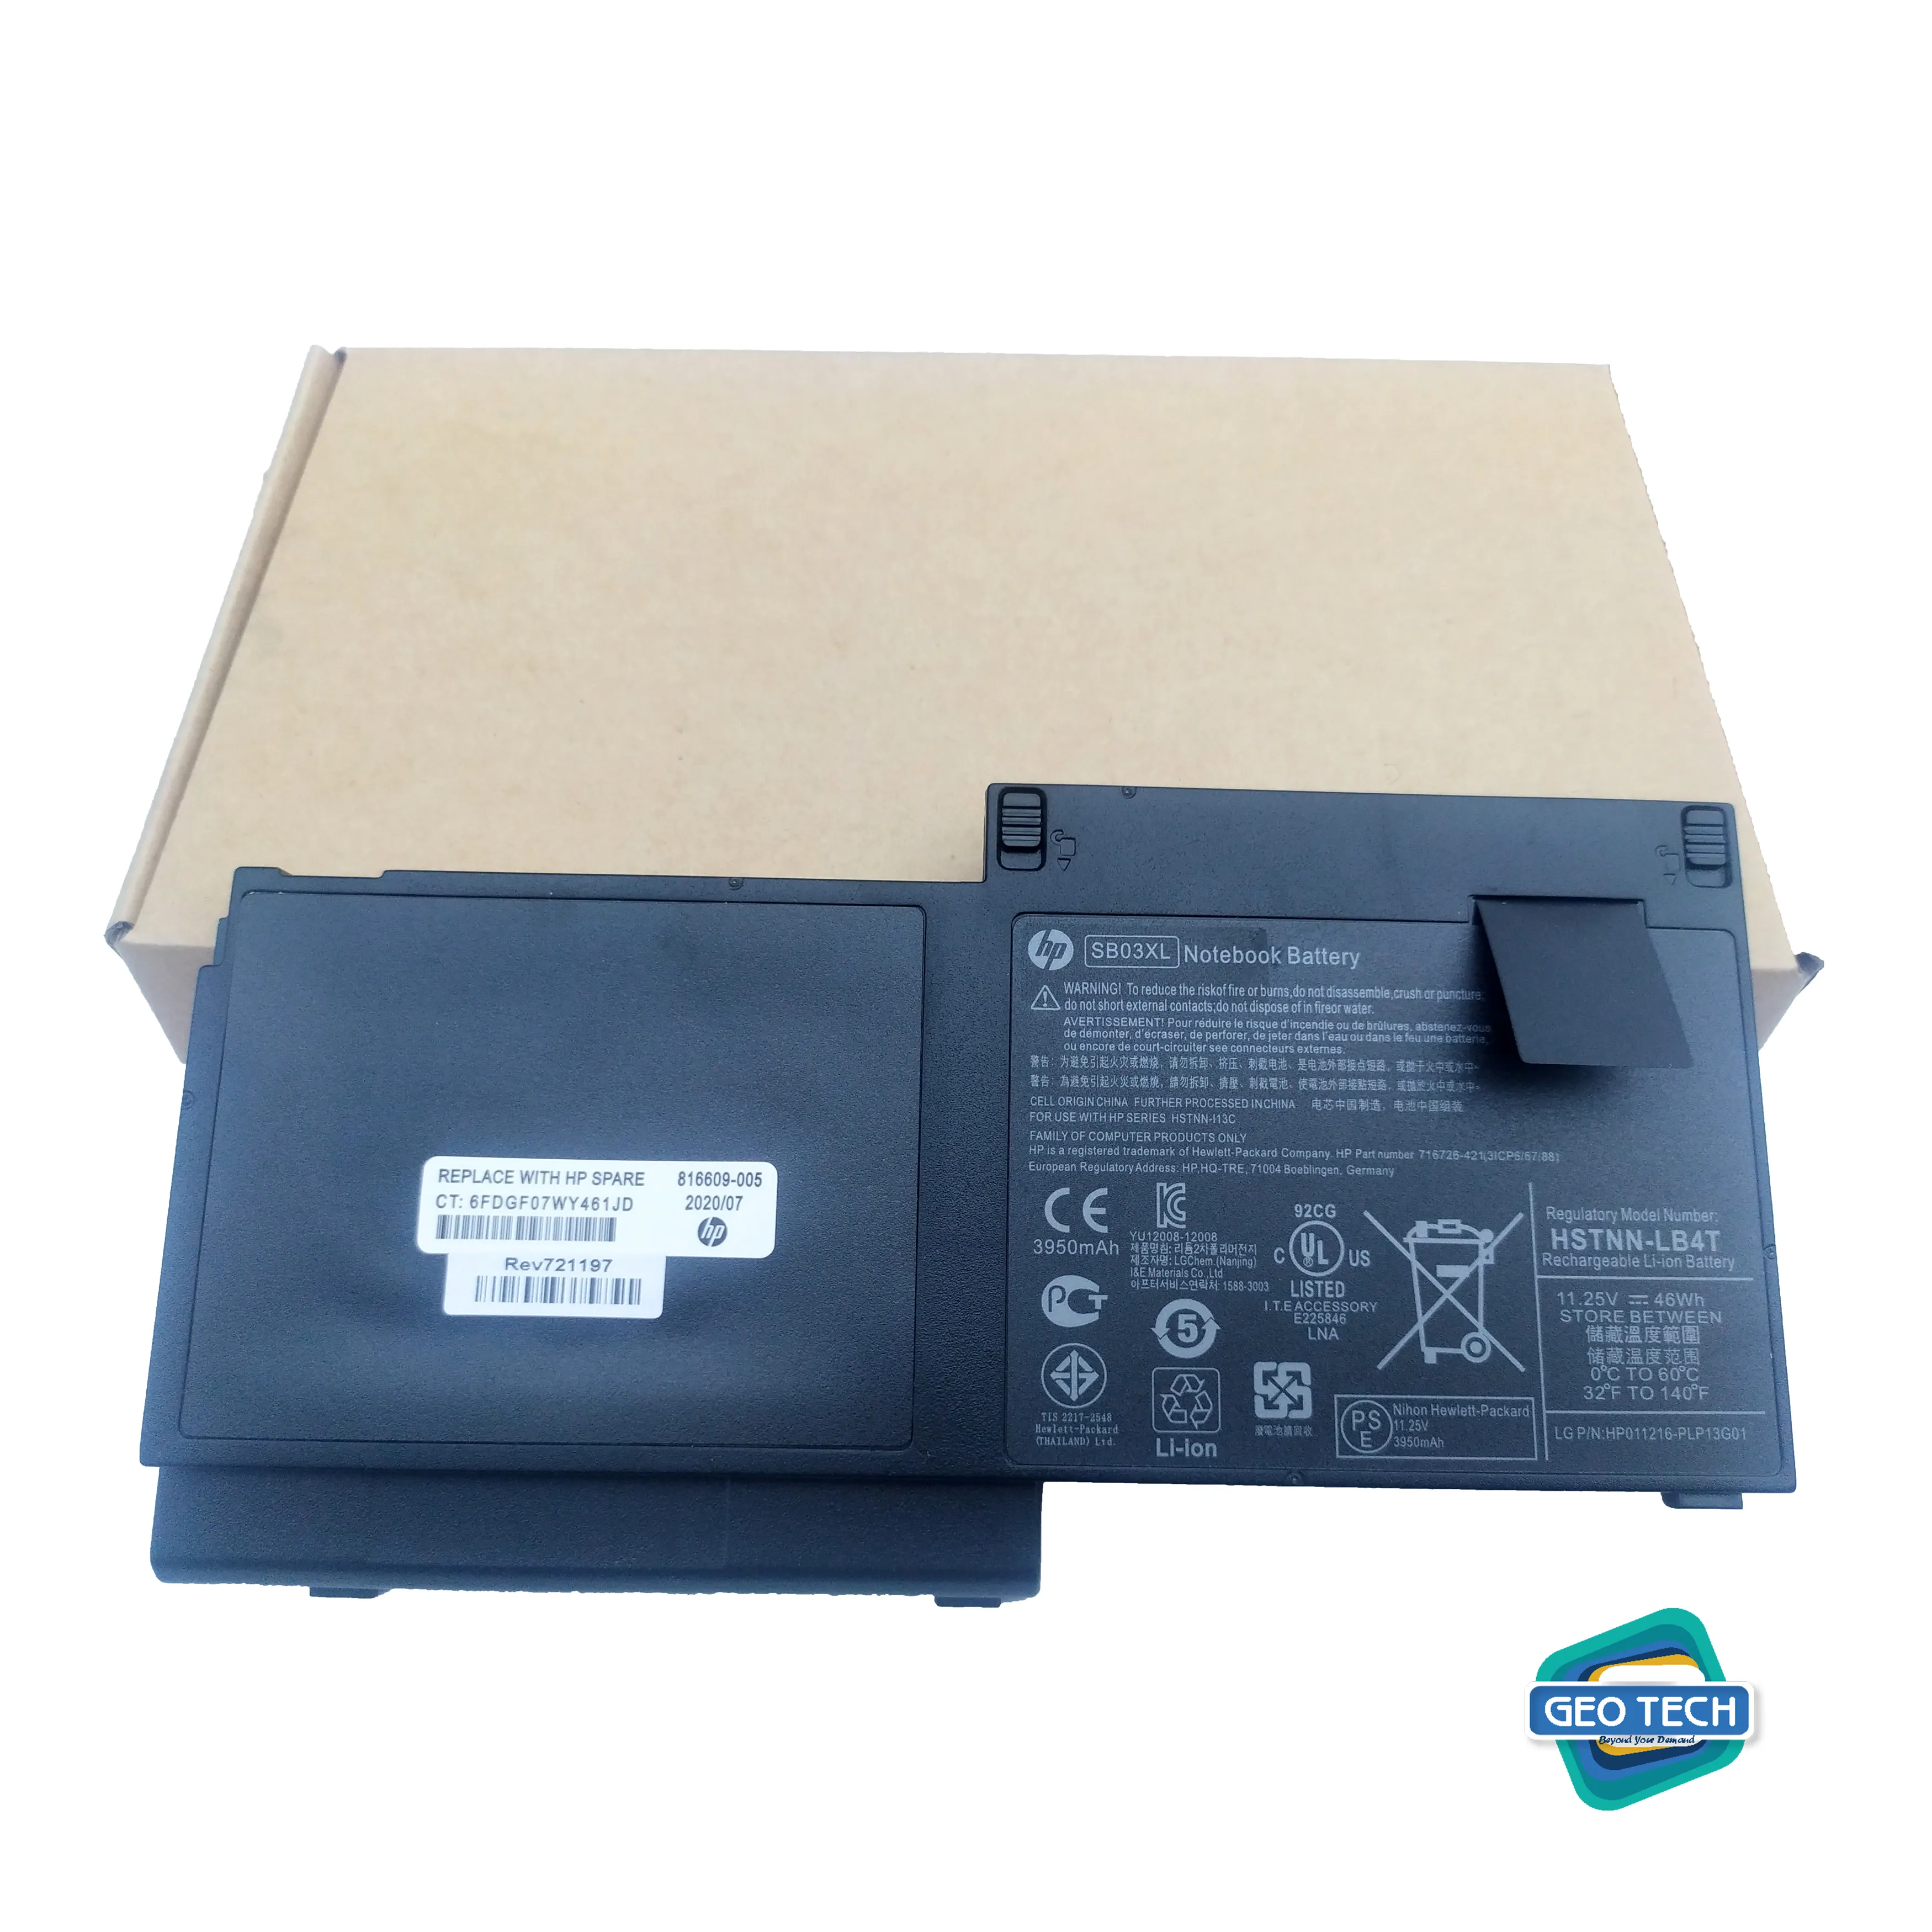 HP EliteBook SB03XL Series Original Laptop Battery, Power: 46wh /SB03XL Battery for HP Elitebook 720 725 G2 820 G1 G2 716726-421 717378-001 HSTNN-LB4T HSTNN-I13C